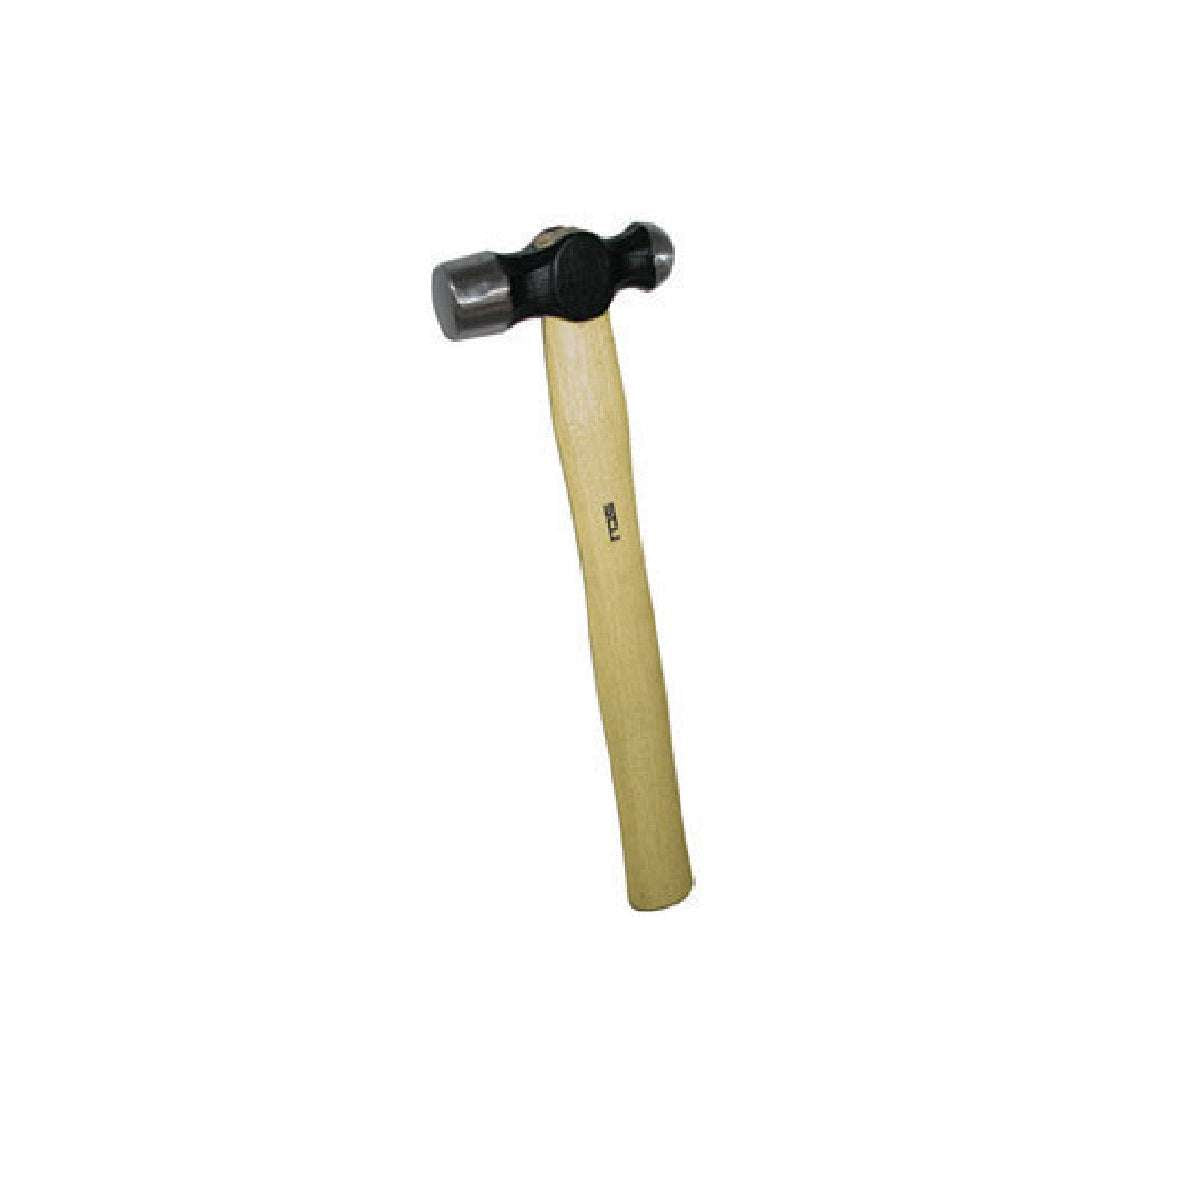 Hardened and forged steel ball-peen hammer with hardwood handle - Sicutool